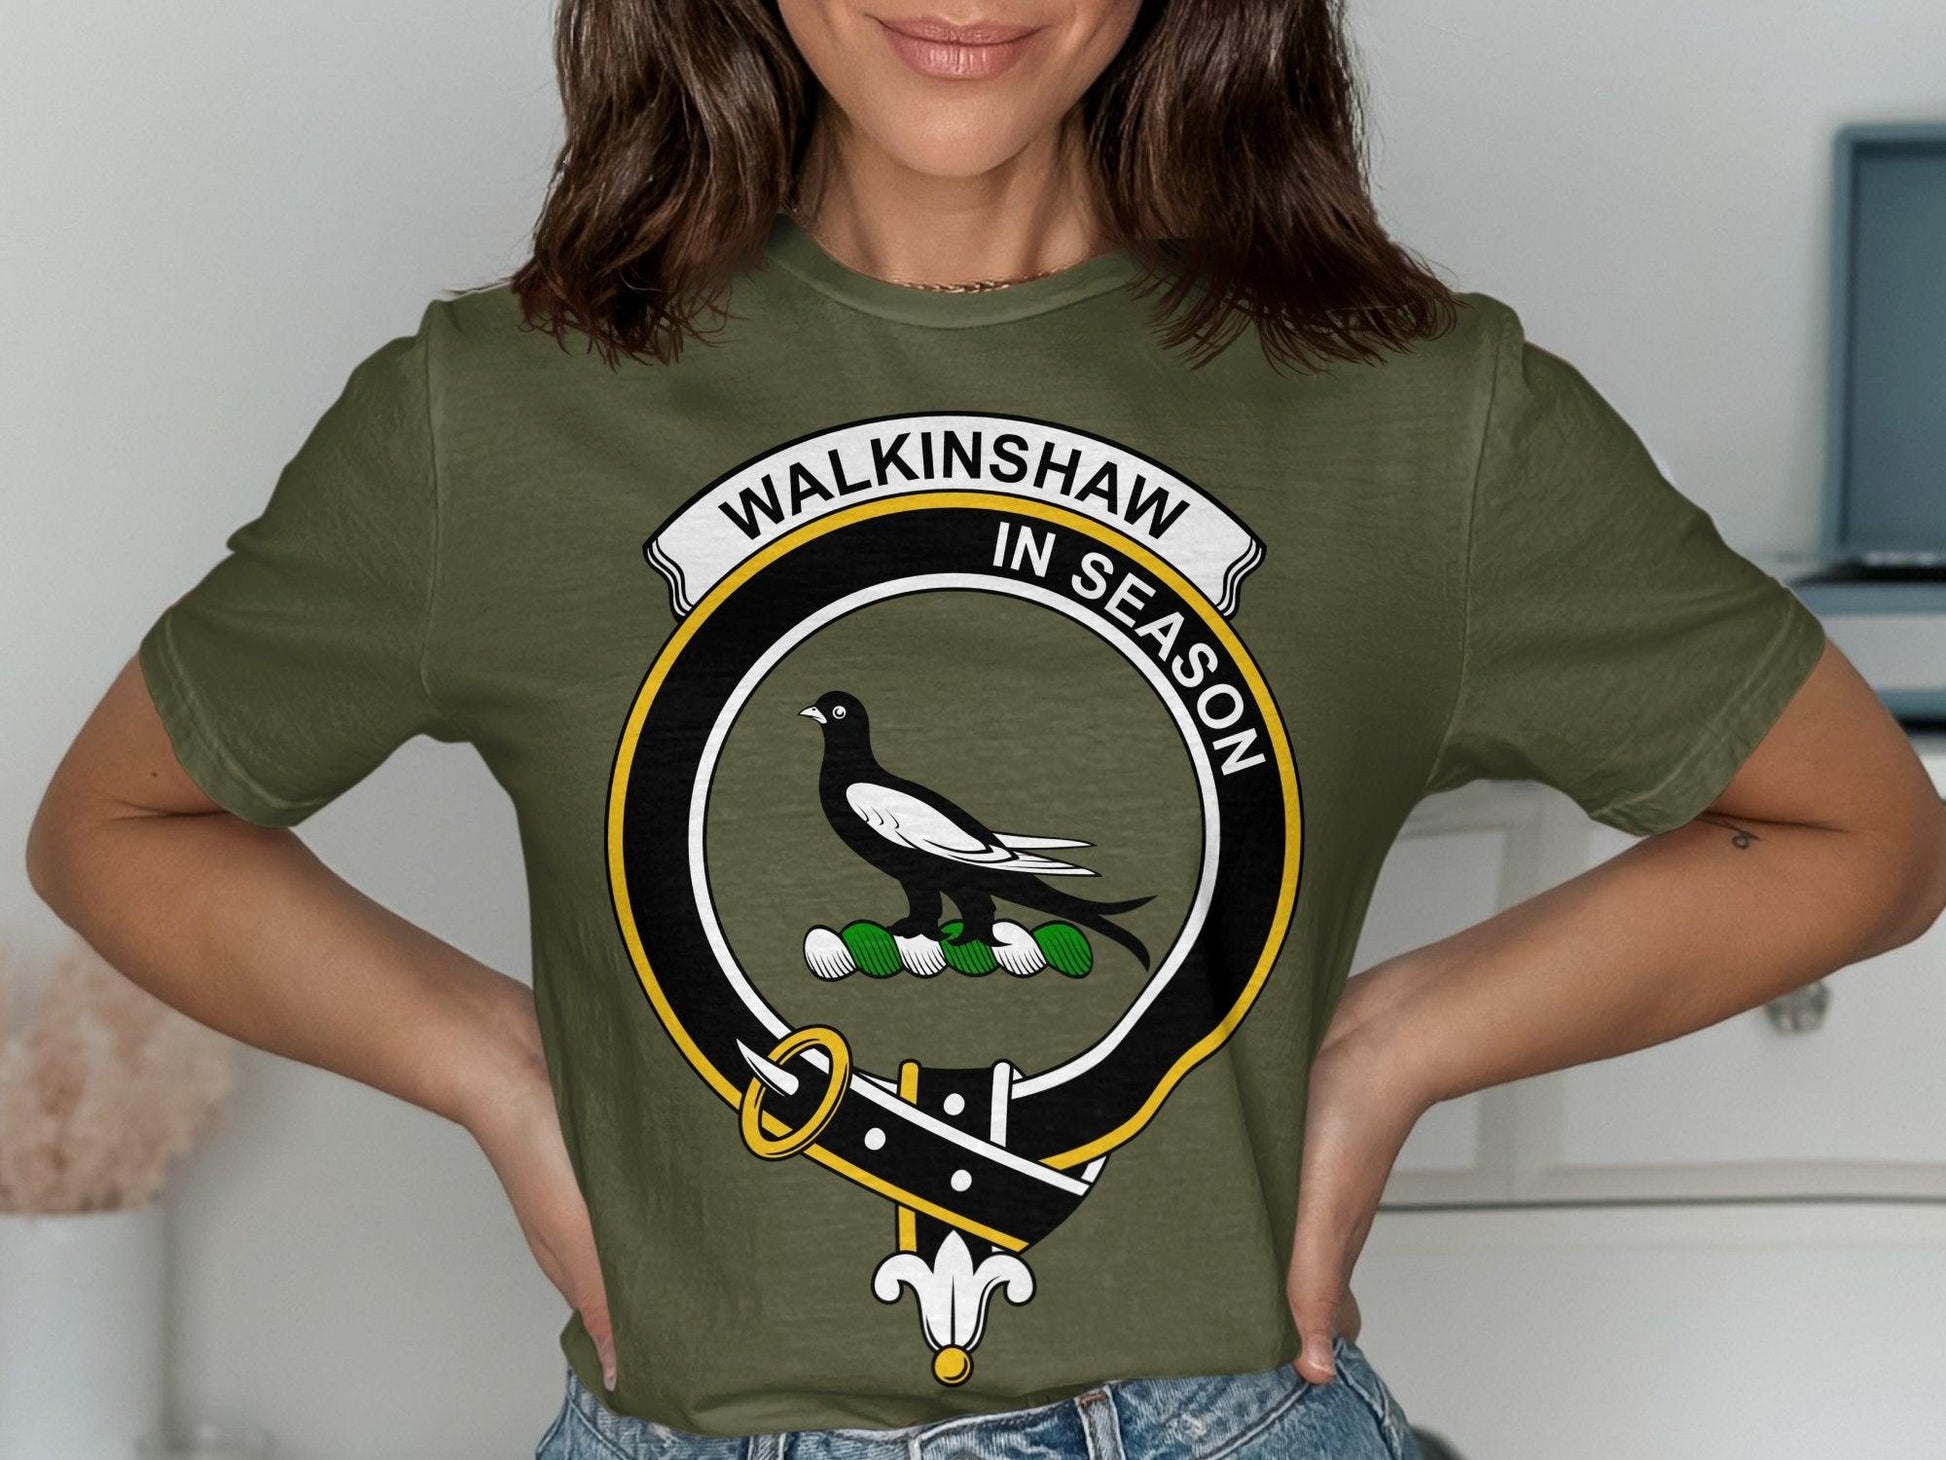 Walkinshaw Scottish Clan Crest Highland Games T-Shirt - Living Stone Gifts